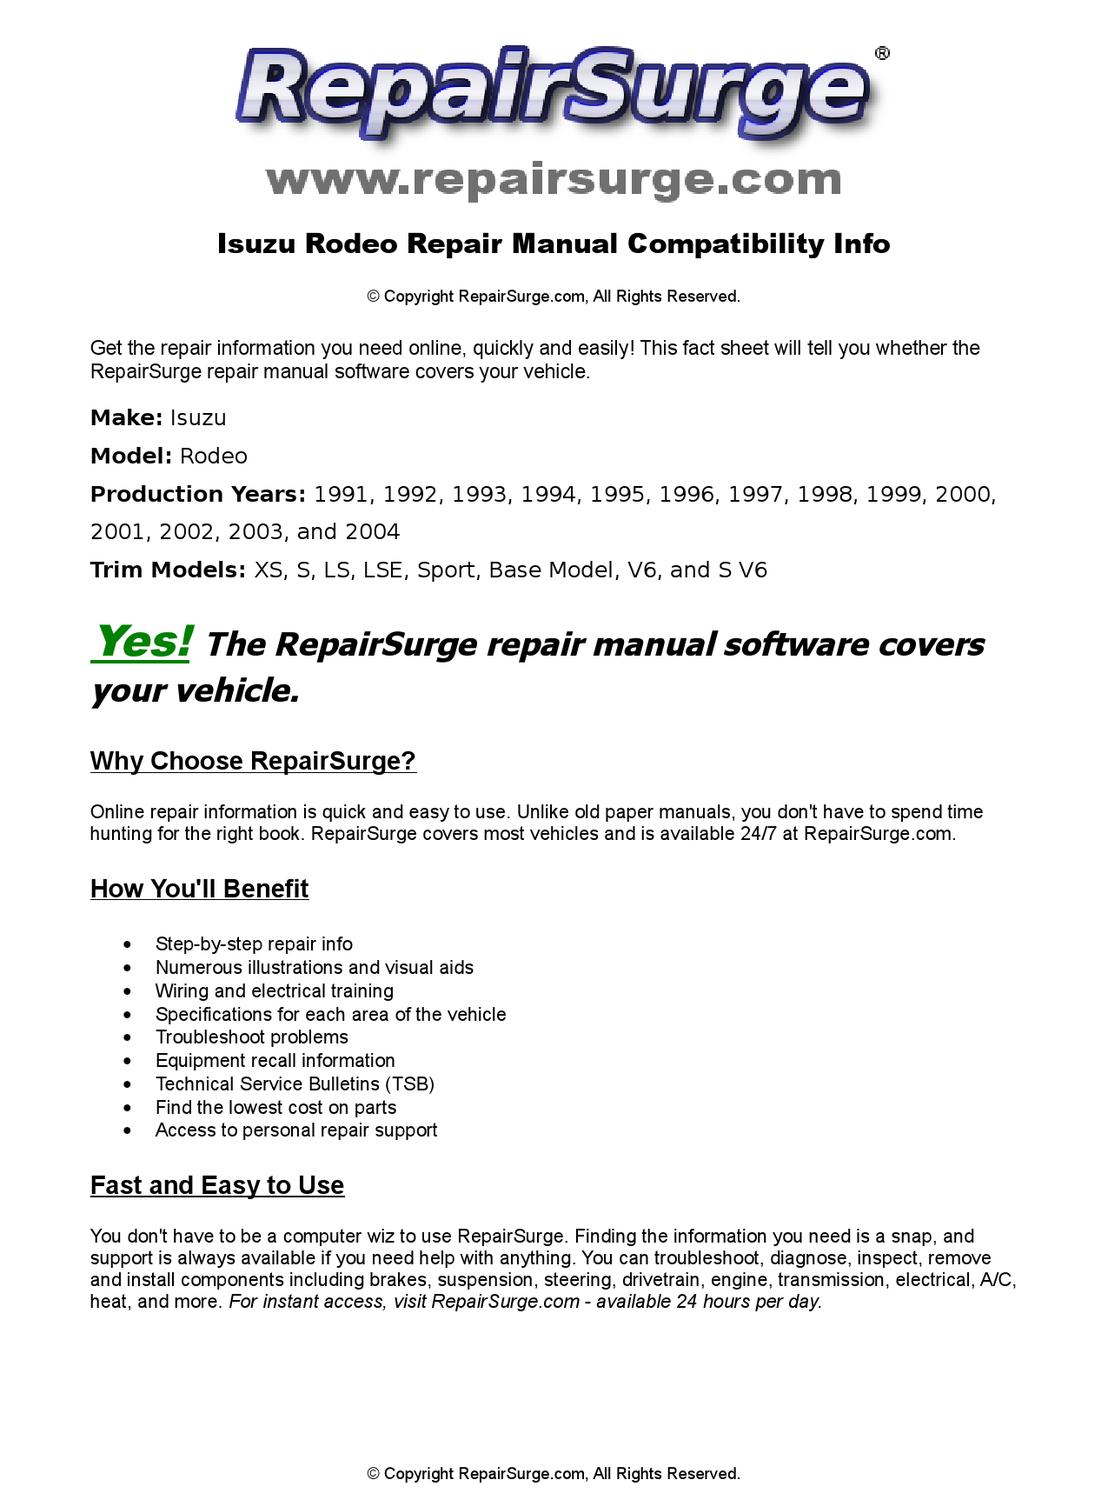 Isuzu rodeo owners manual pdf